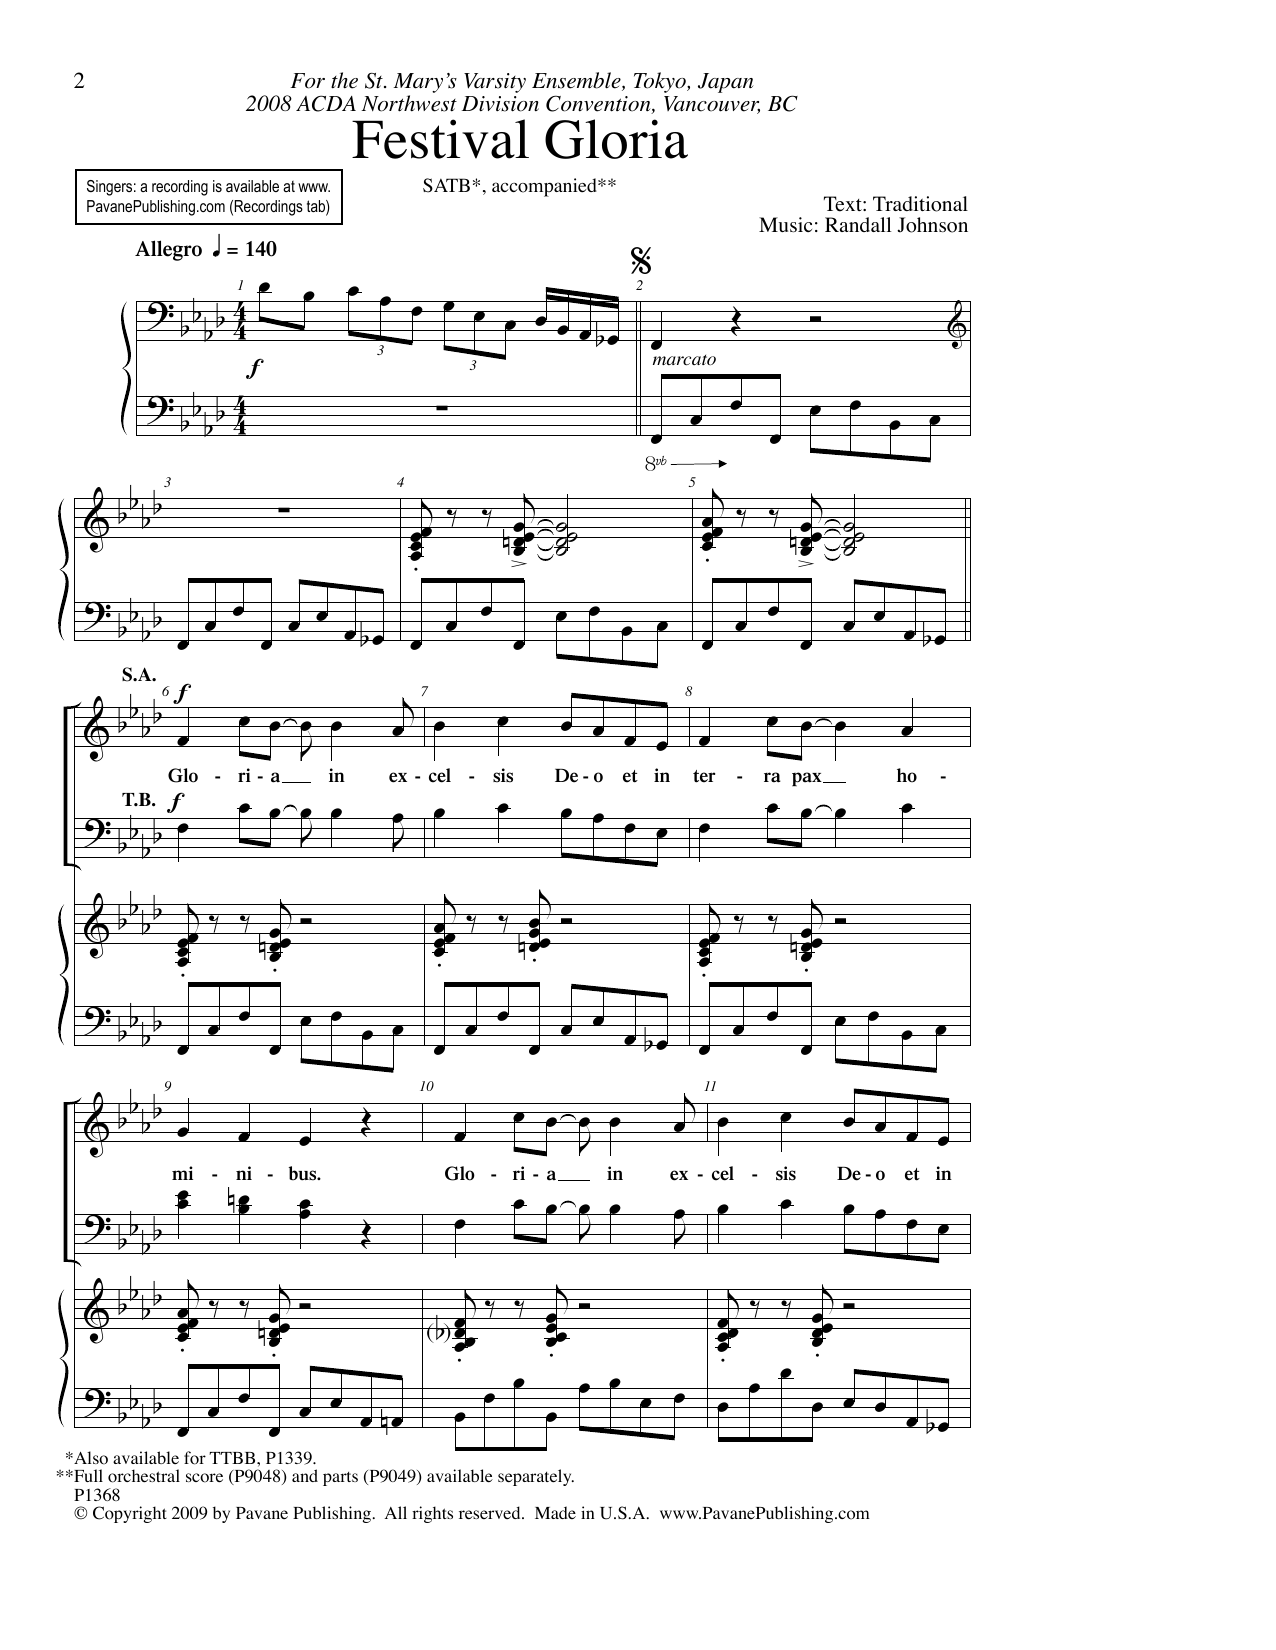 Download Randall Johnson Festival Gloria Sheet Music and learn how to play TTBB Choir PDF digital score in minutes